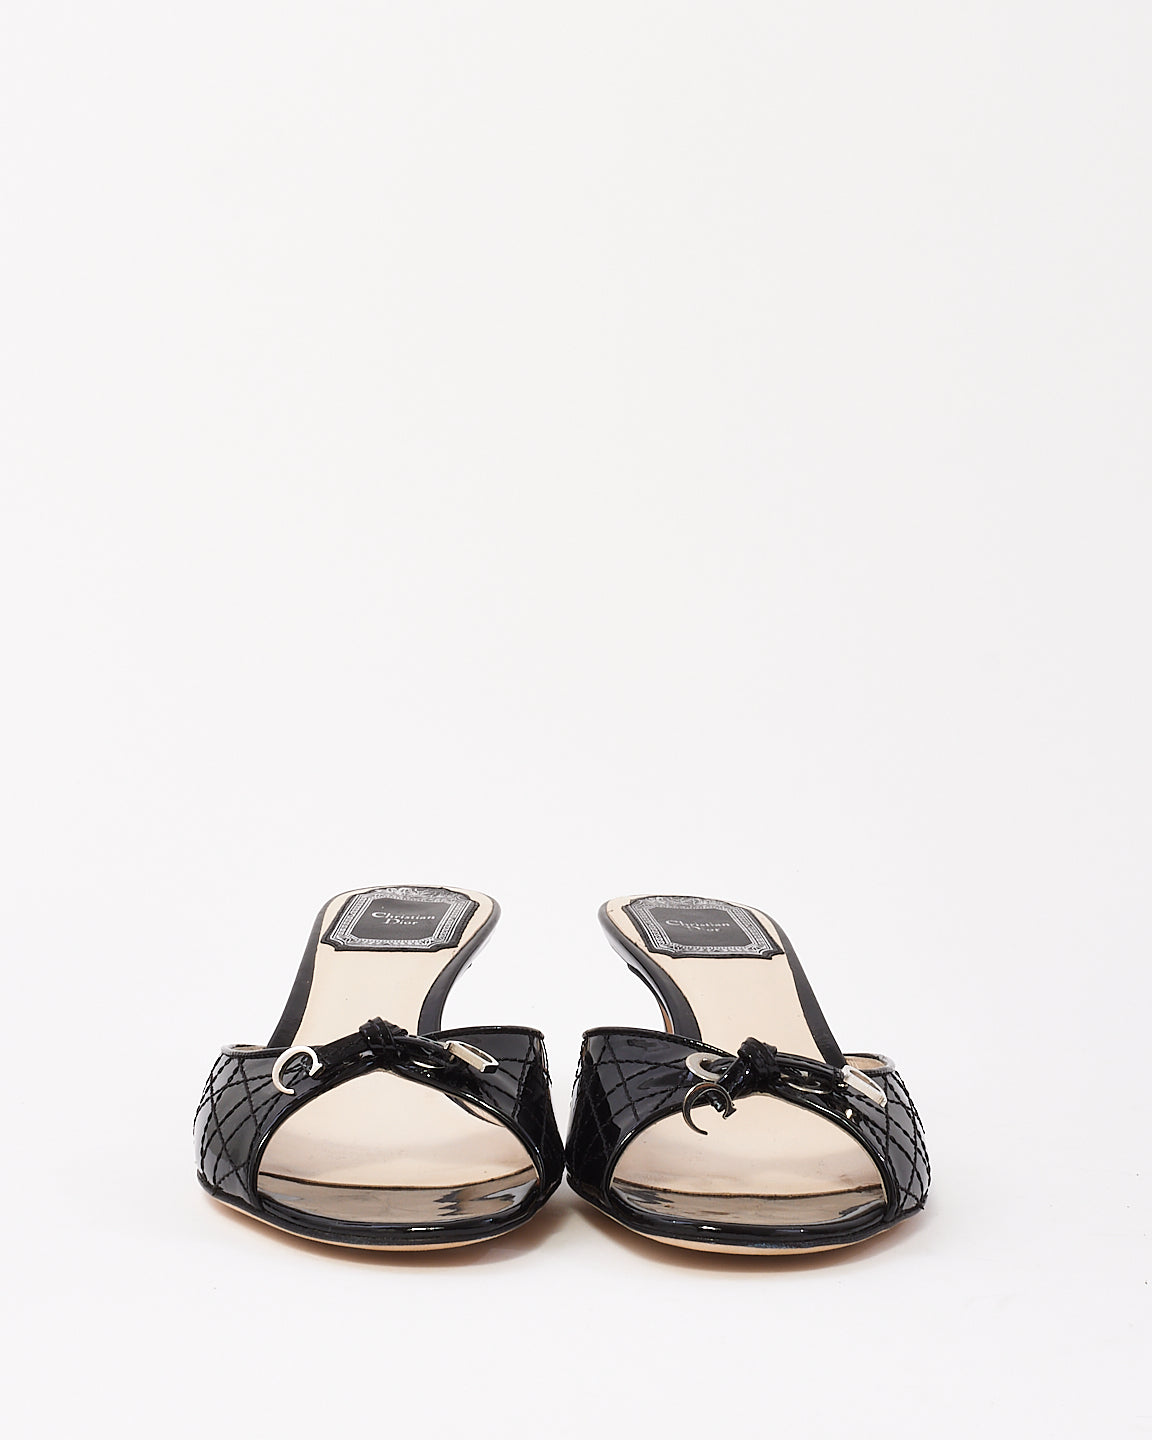 Sandales en cuir Cannage verni noir Dior -36,5